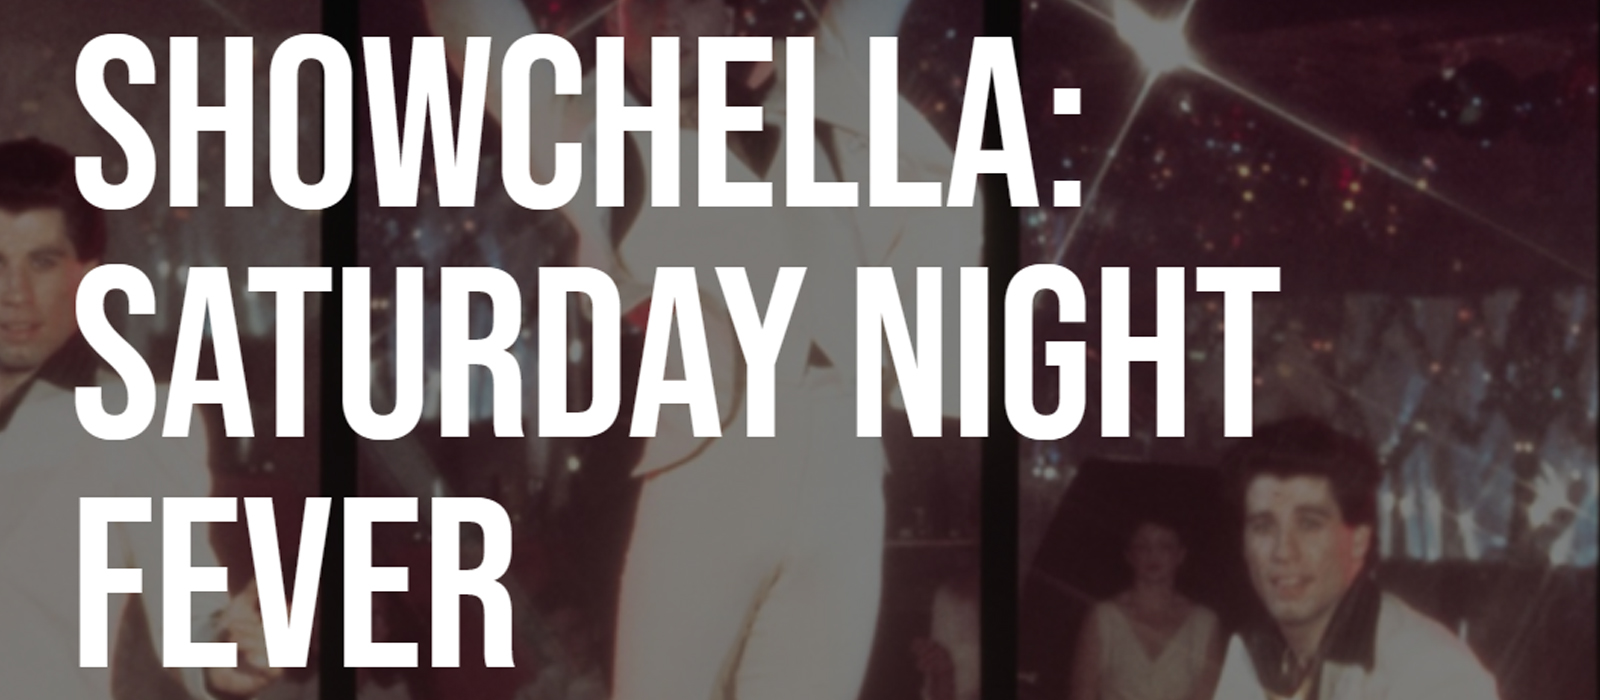 Showchella Saturday Night Fever banner